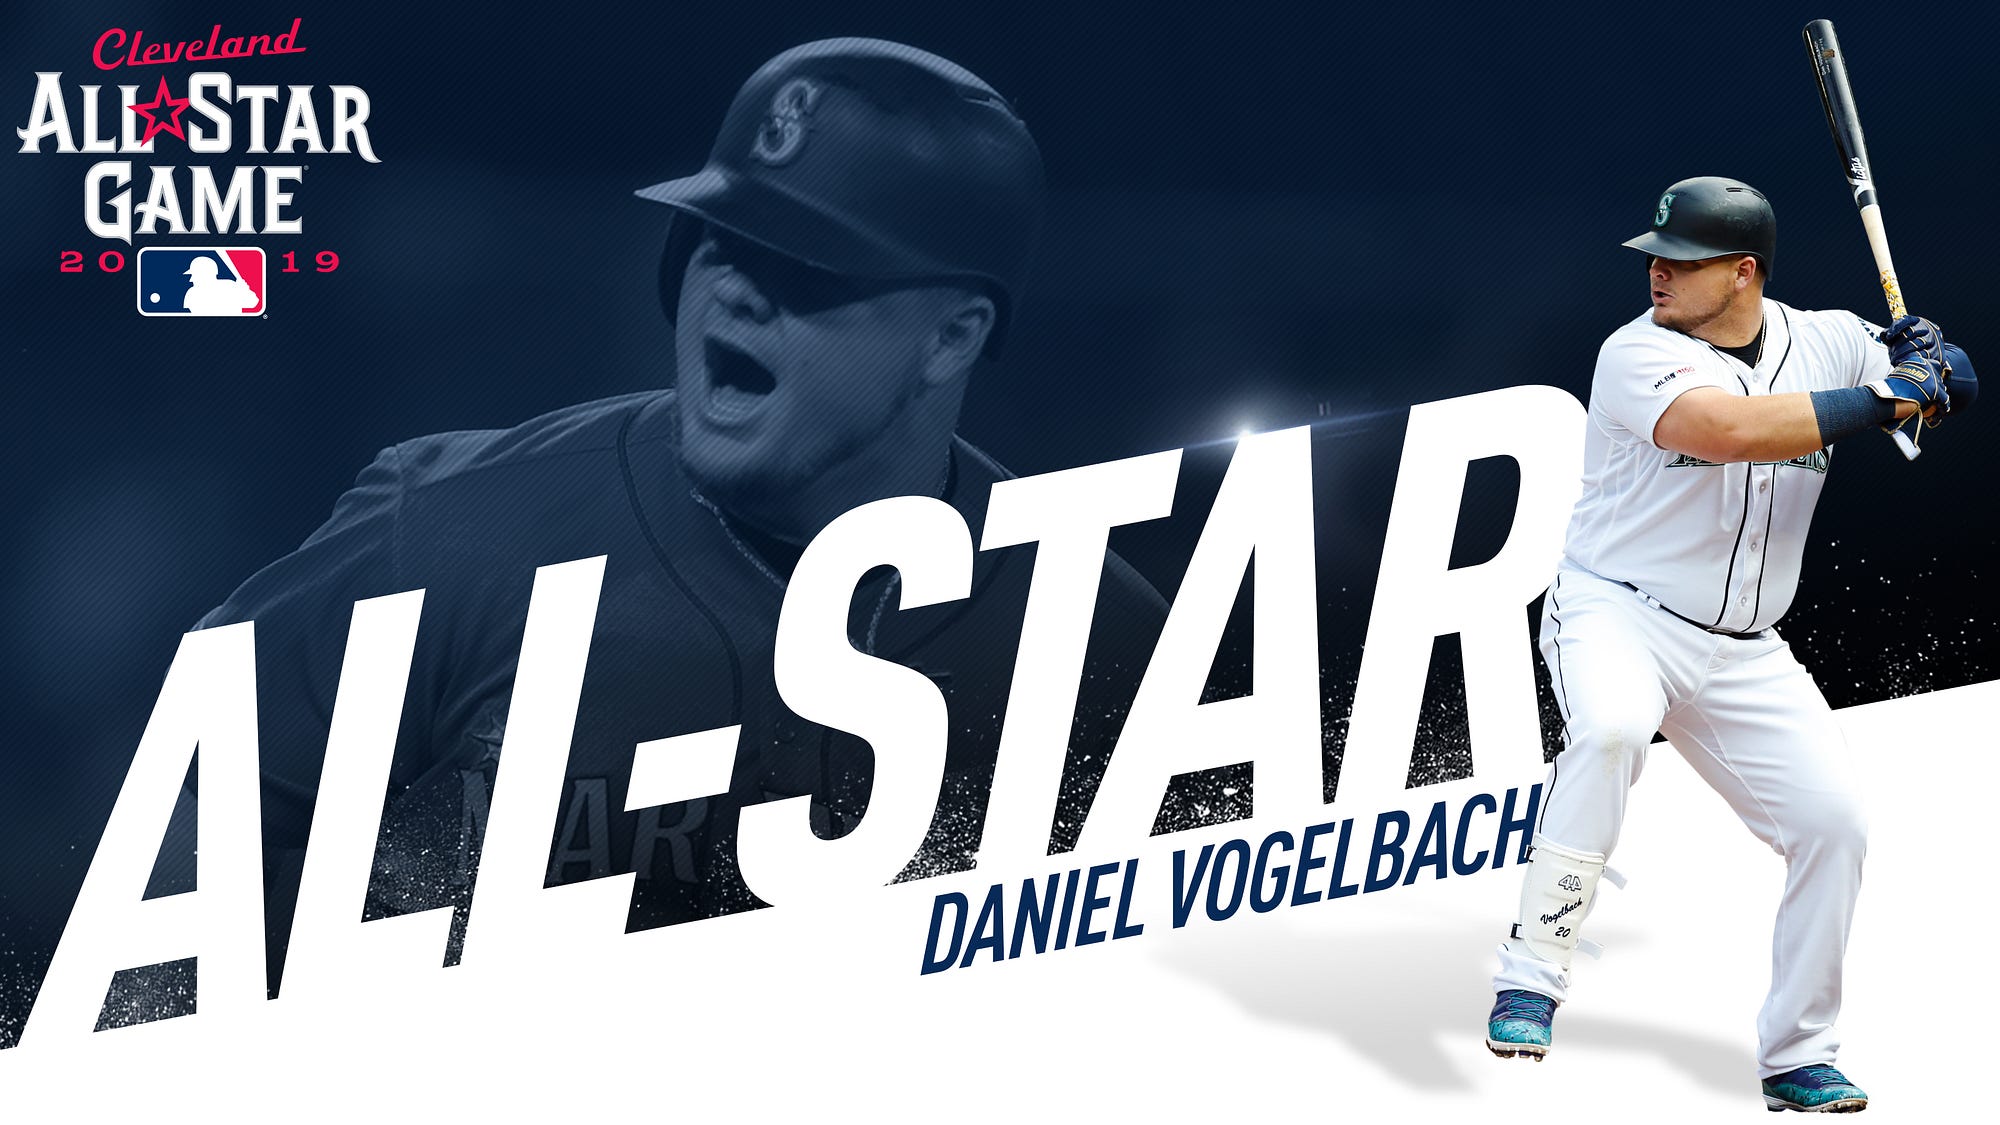 Daniel Vogelbach Named to American League All-Star Team